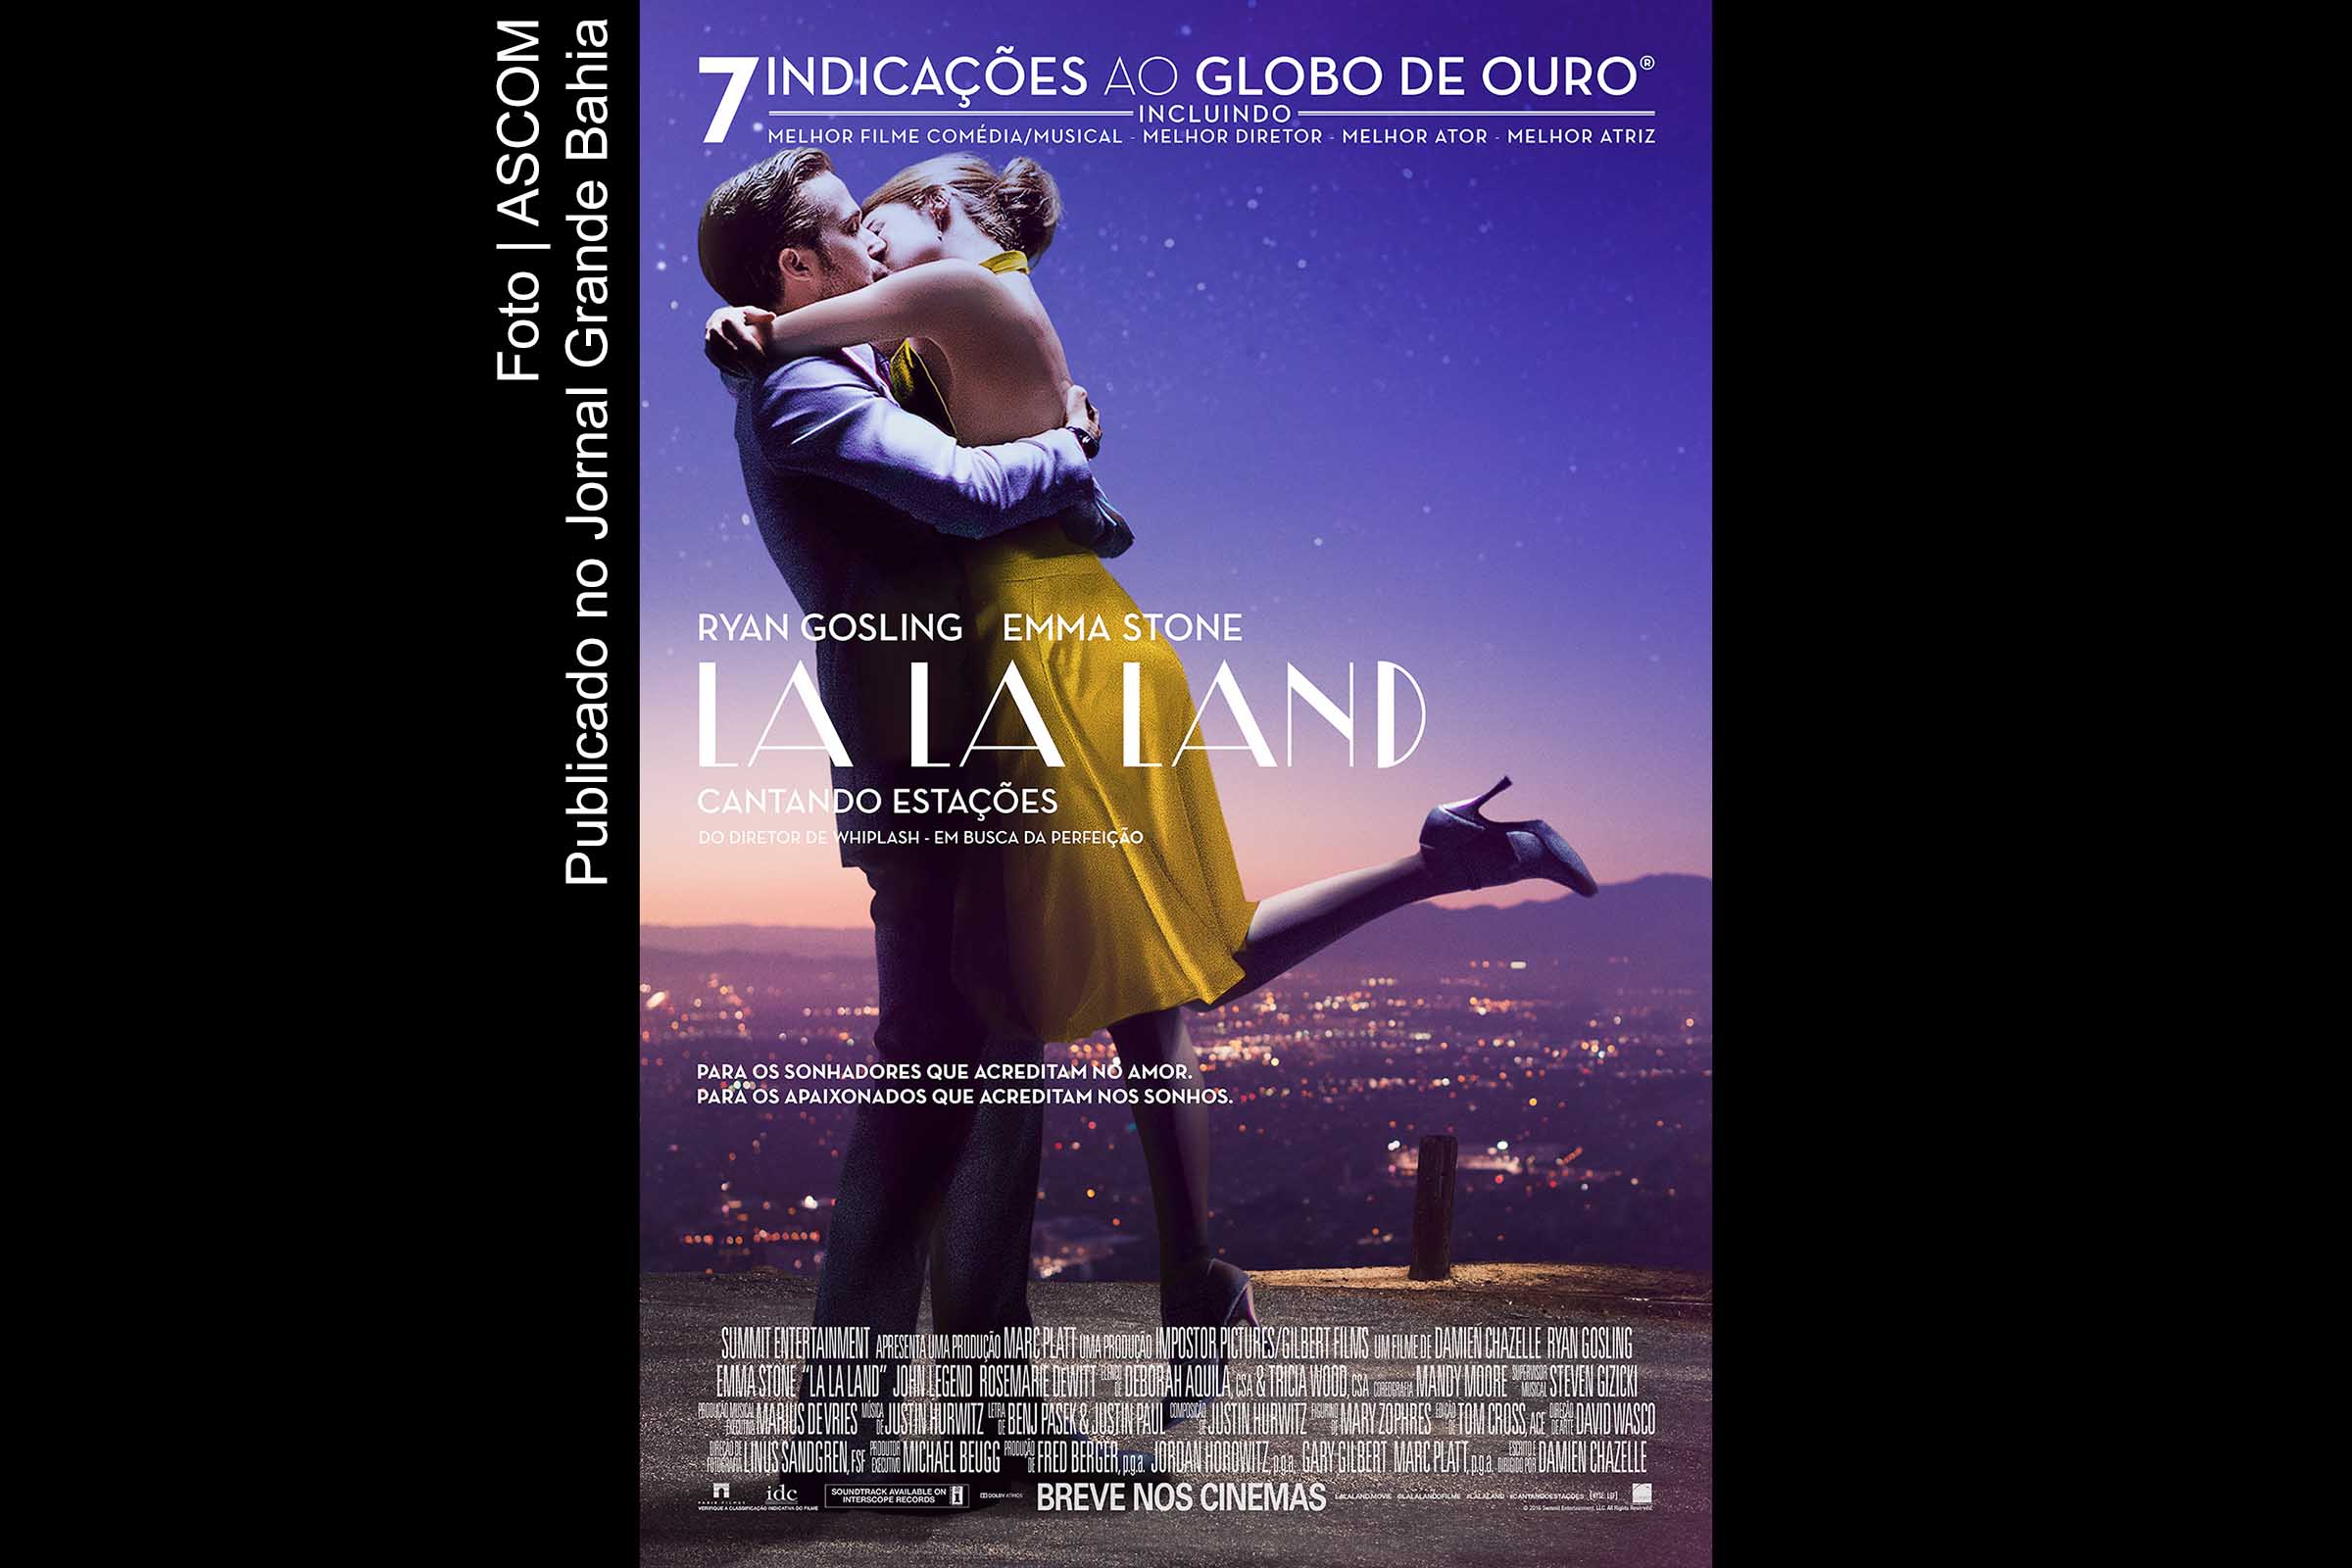 Cartaz do filme La La Land. Obra cinematográfica concorre ao Oscar.